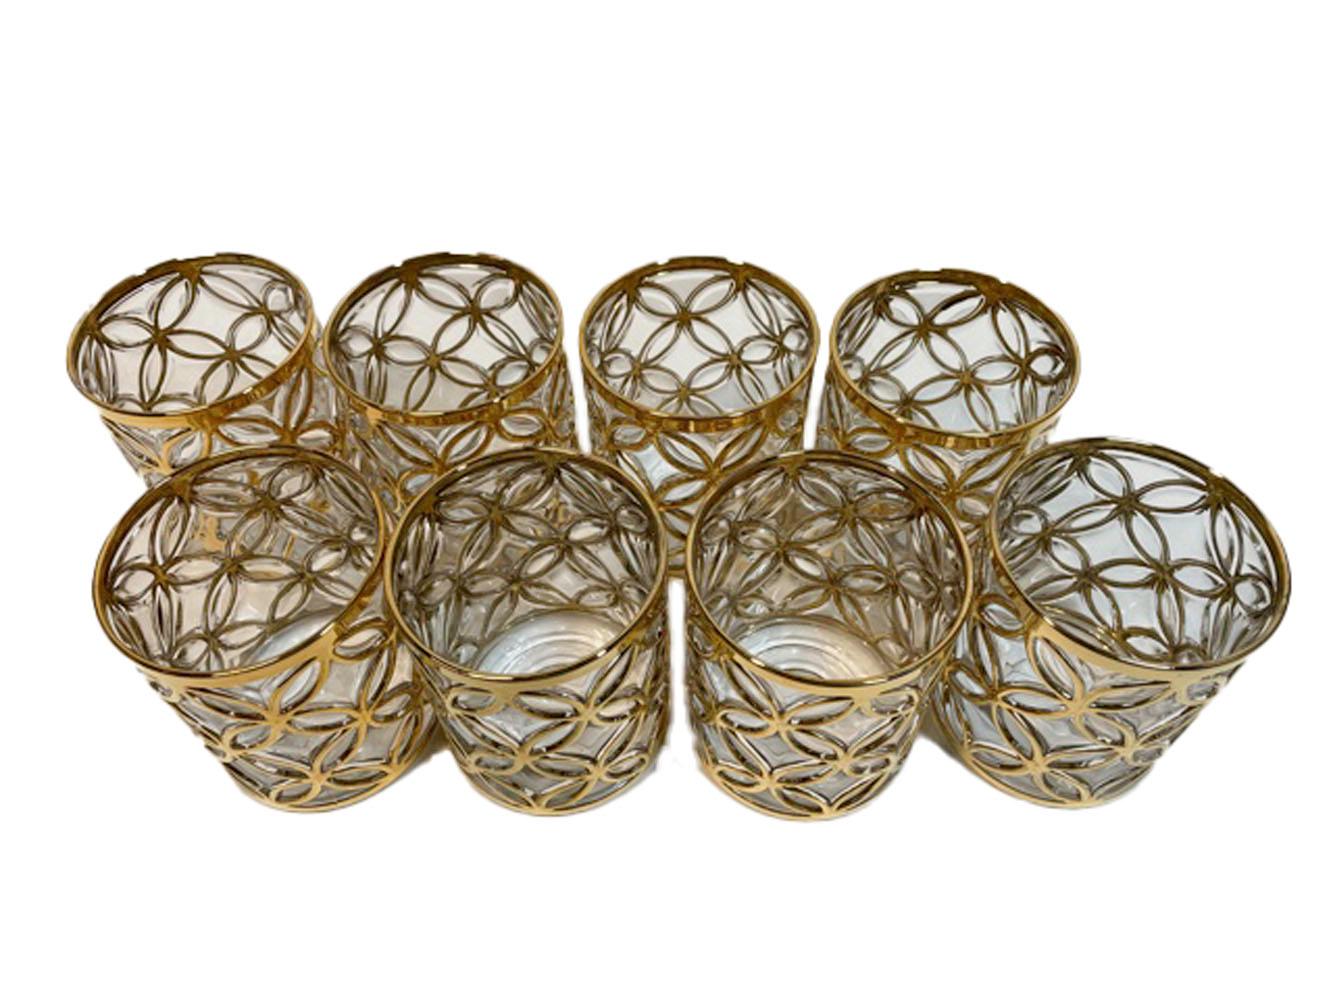 Mid-Century Modern Vintage Imperial Glass Rocks Glasses in the Sortijas de Oro Pattern For Sale